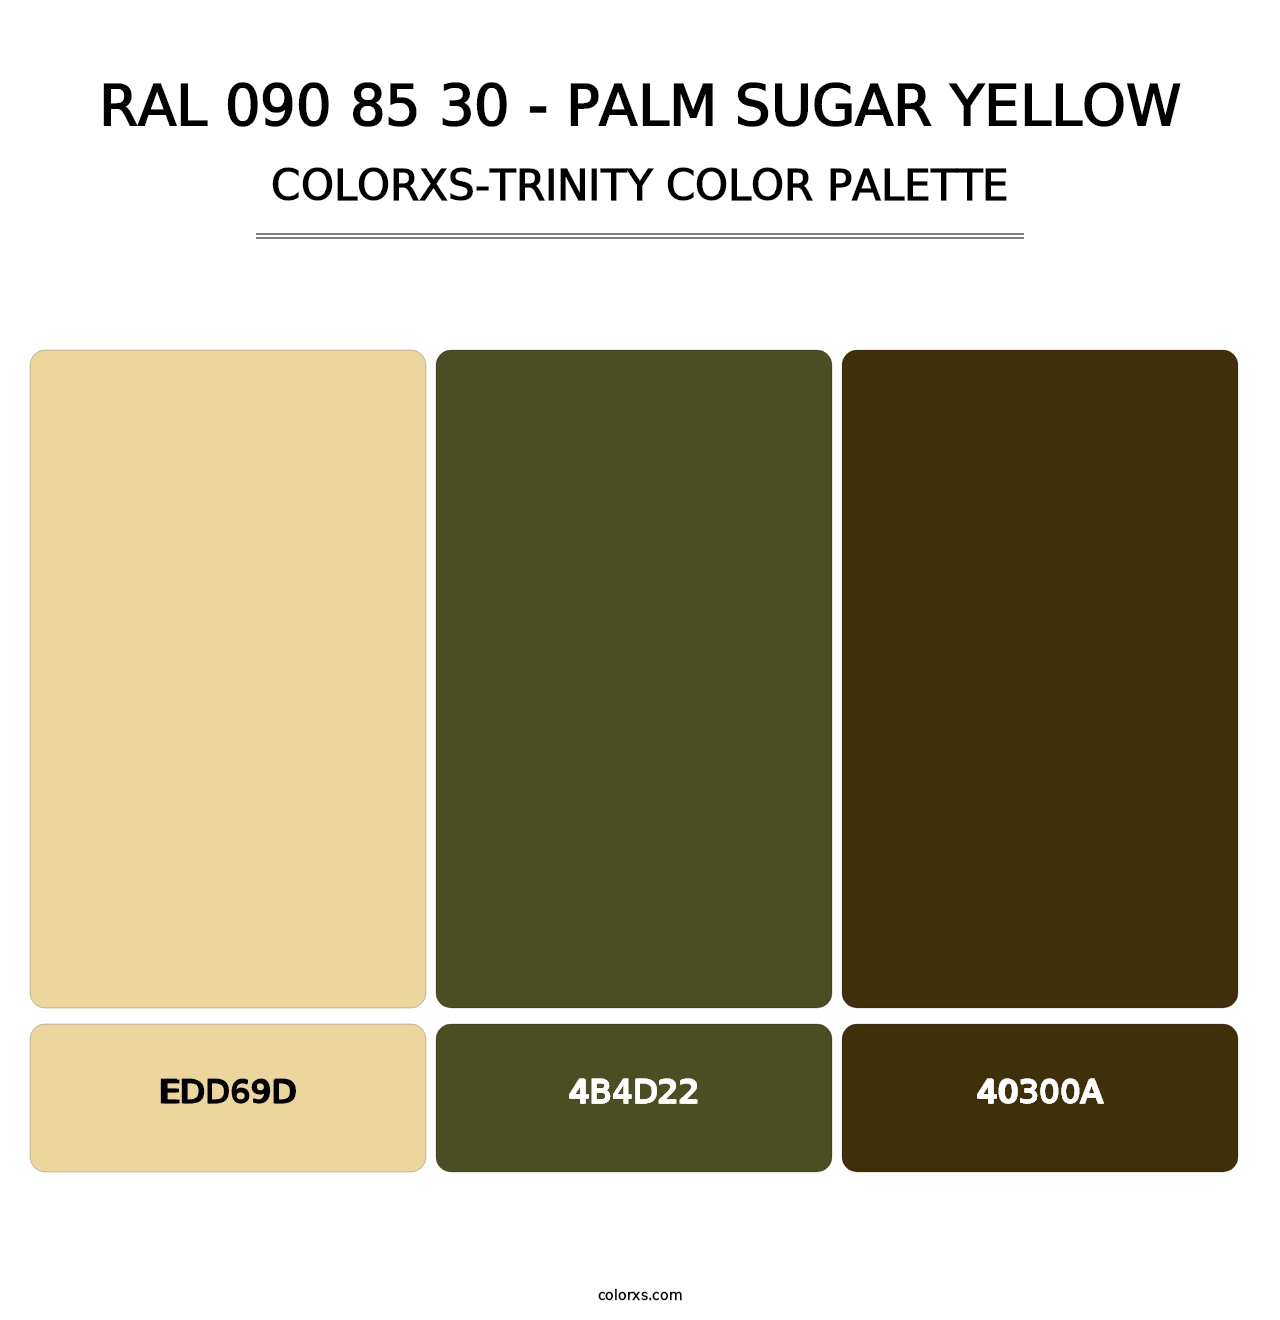 RAL 090 85 30 - Palm Sugar Yellow - Colorxs Trinity Palette